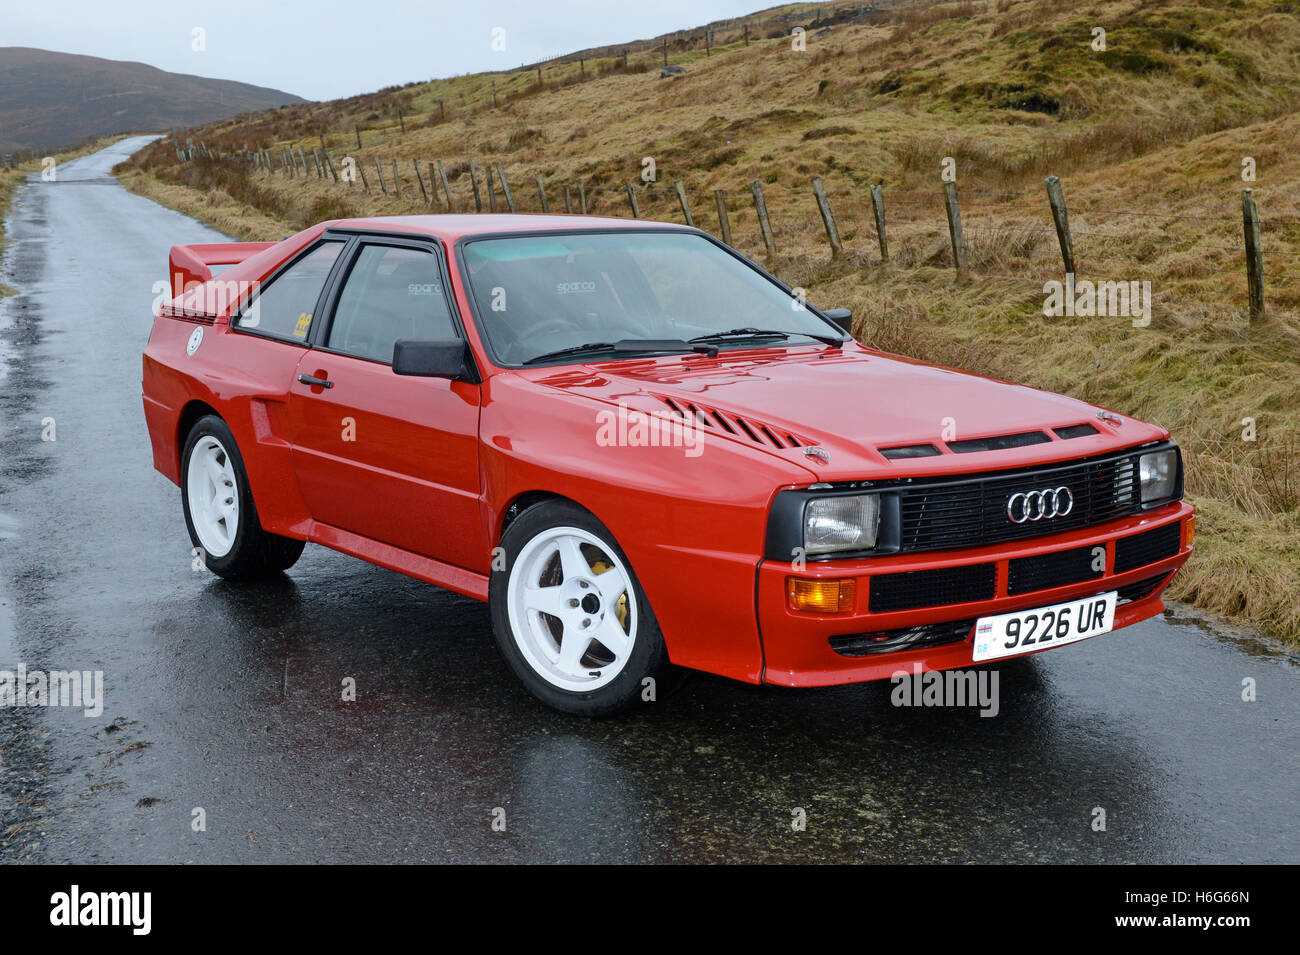 Audi rally car -Fotos und -Bildmaterial in hoher Auflösung – Alamy